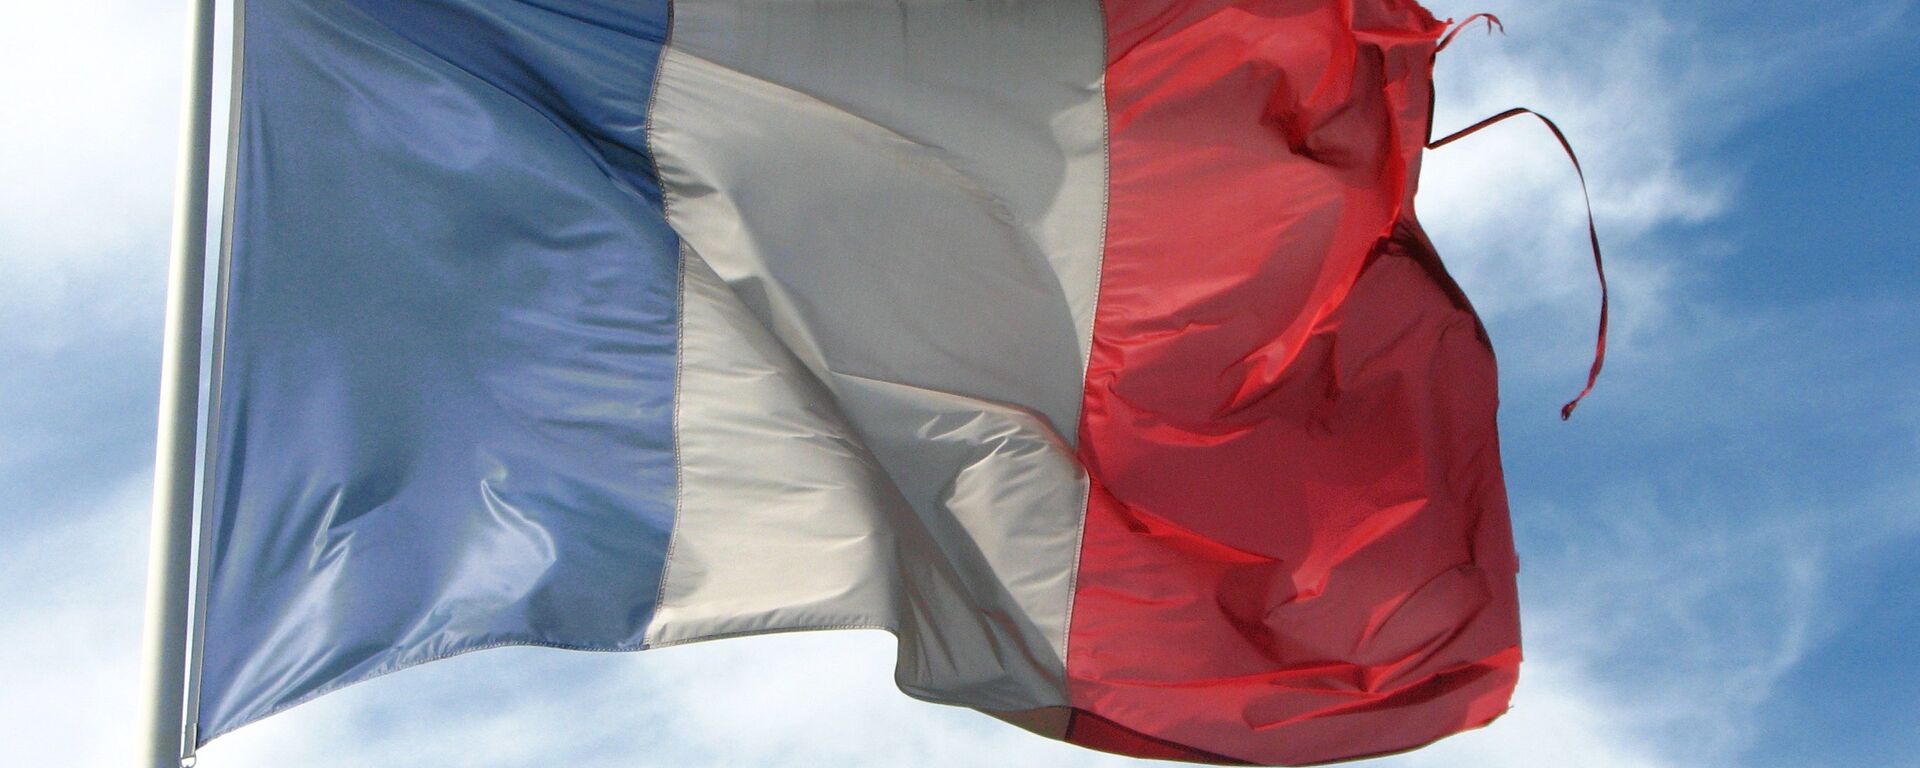 La bandera de Francia - Sputnik Mundo, 1920, 28.04.2021